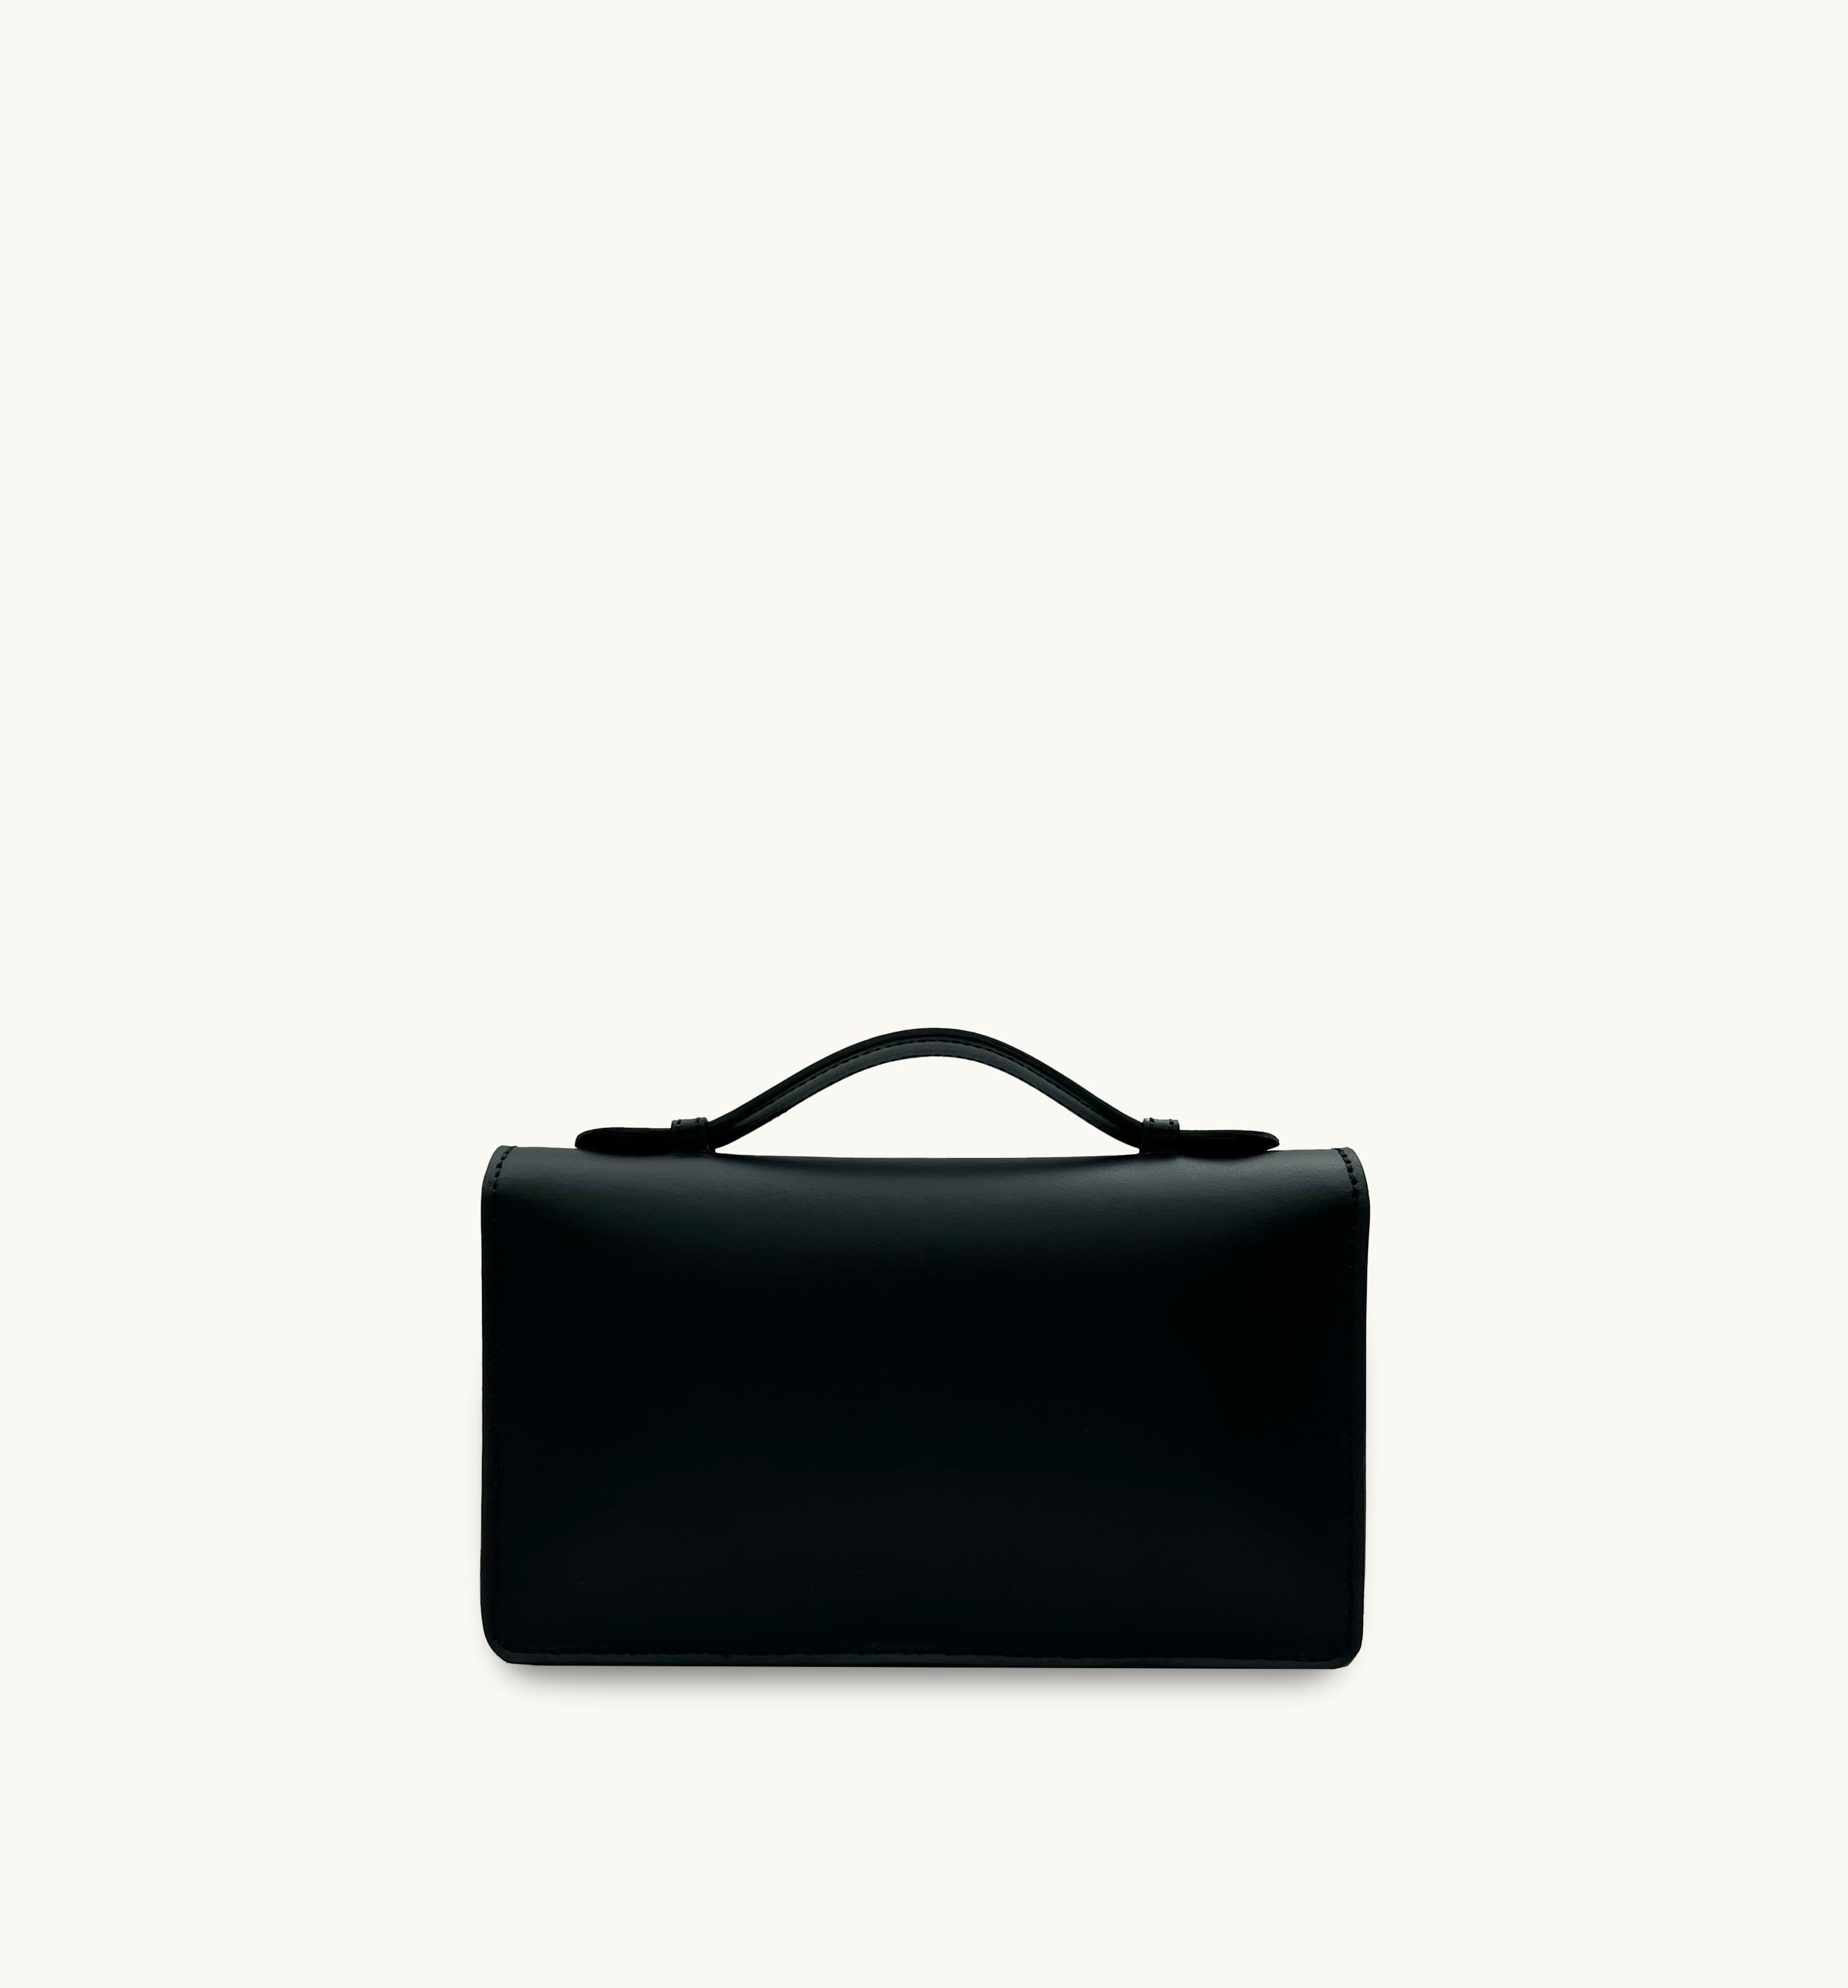 The Amelia Black Leather Bag